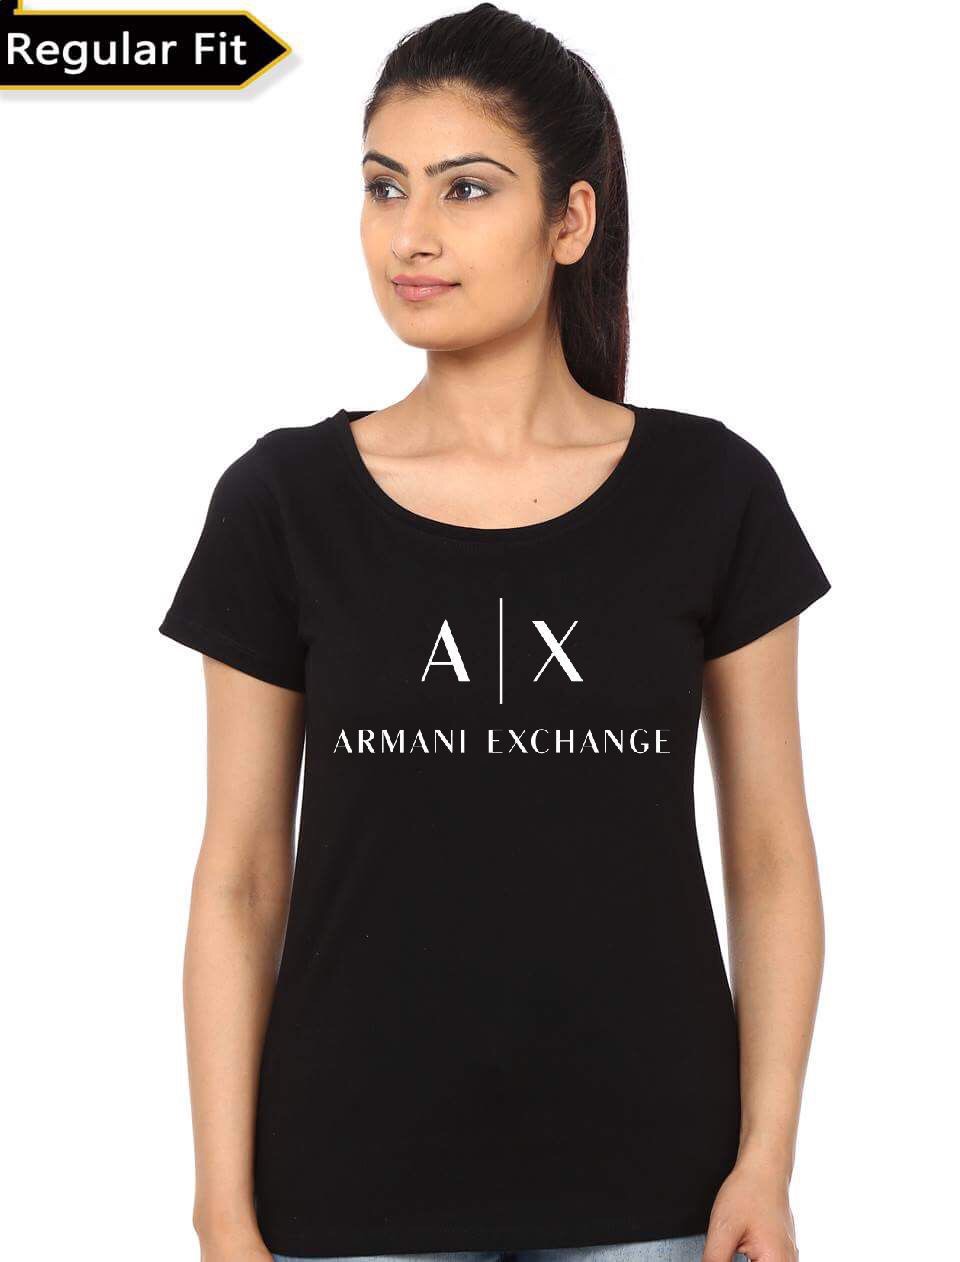 Armani Exchange Girl's Black T-Shirt 